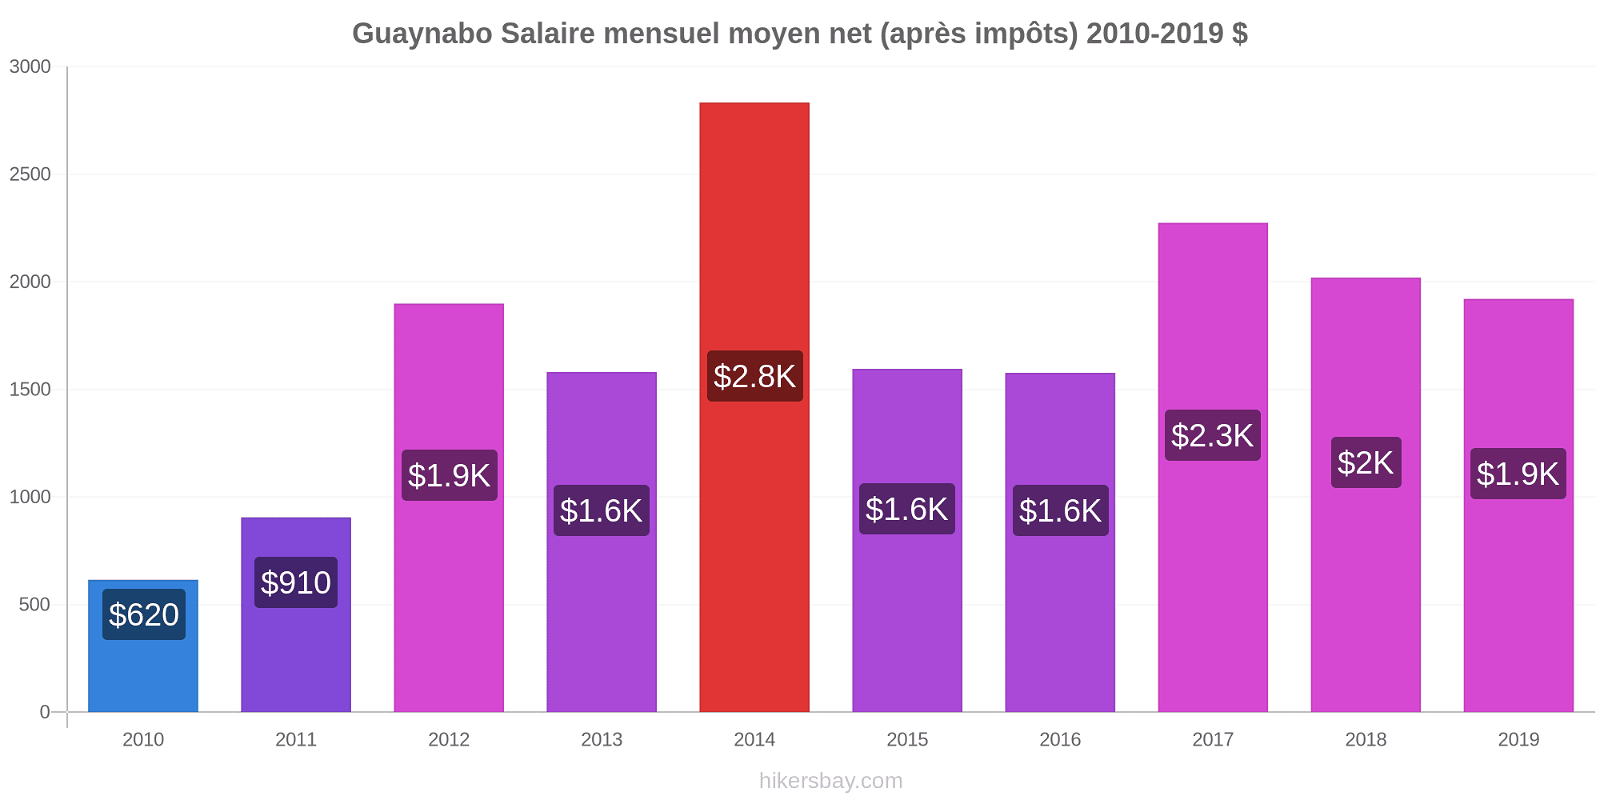 Guaynabo changements de prix Salaire mensuel Net (après impôts) hikersbay.com